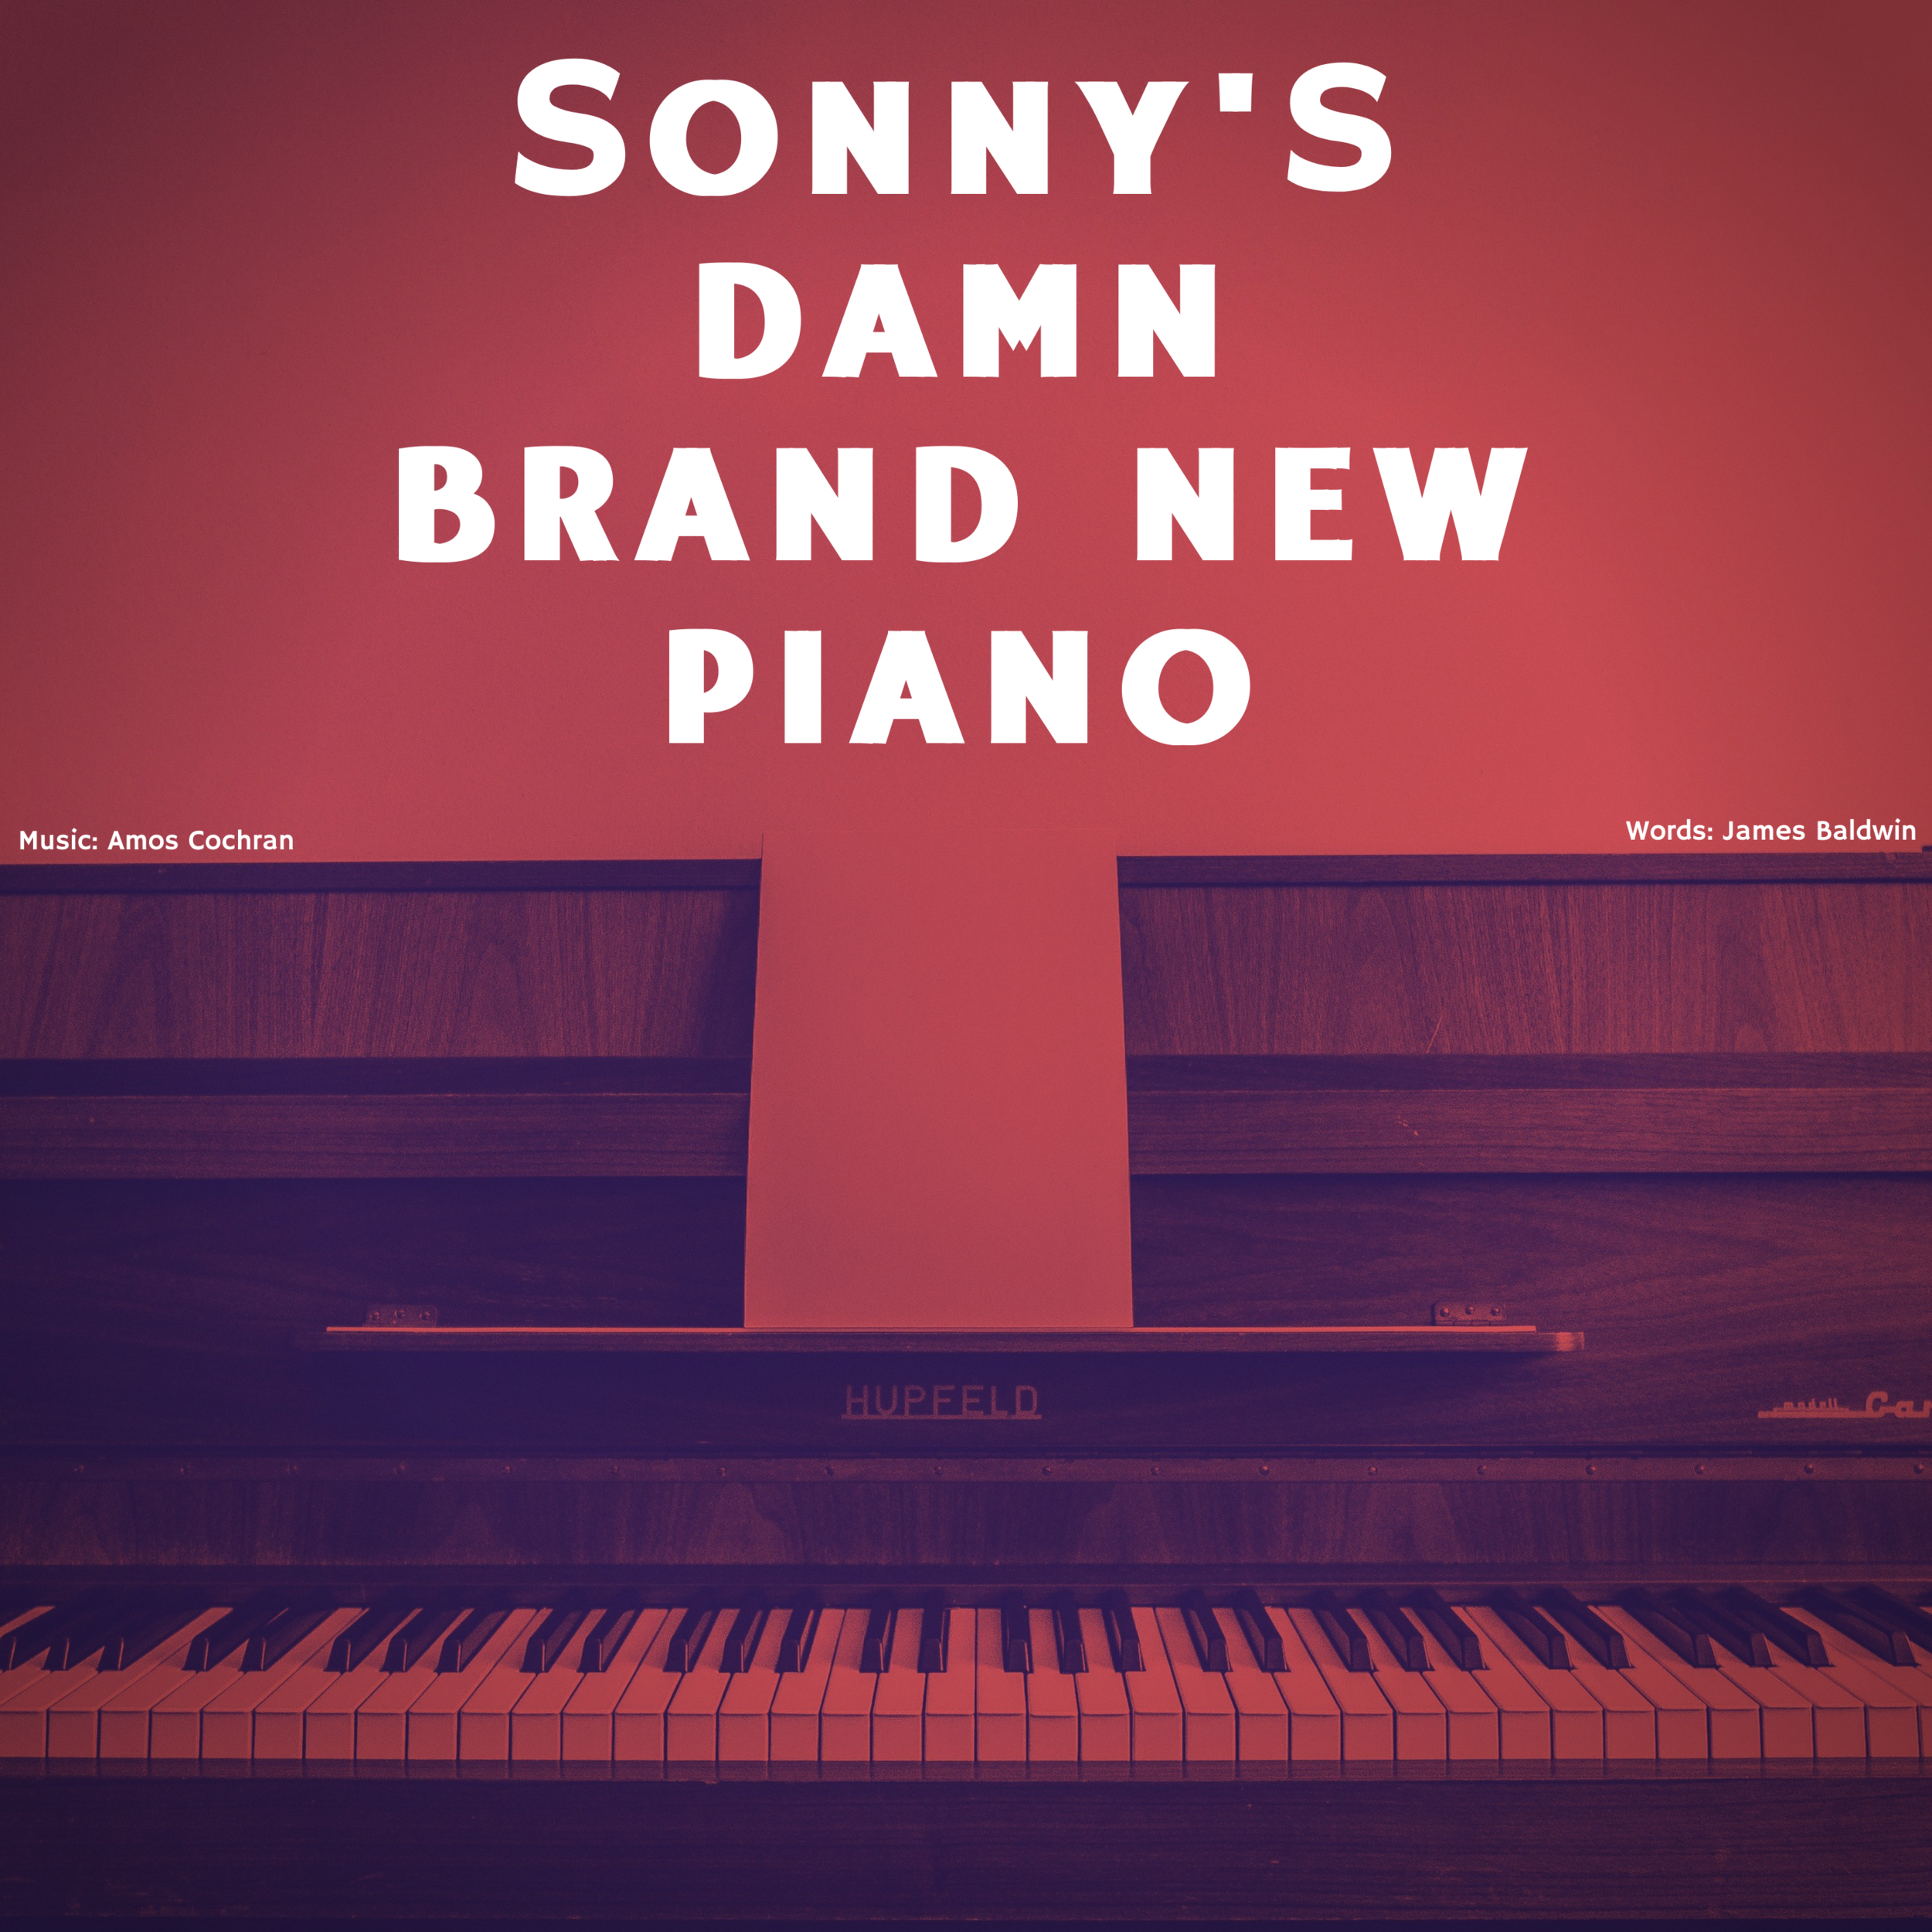 Sonny's Damn Brand New Piano